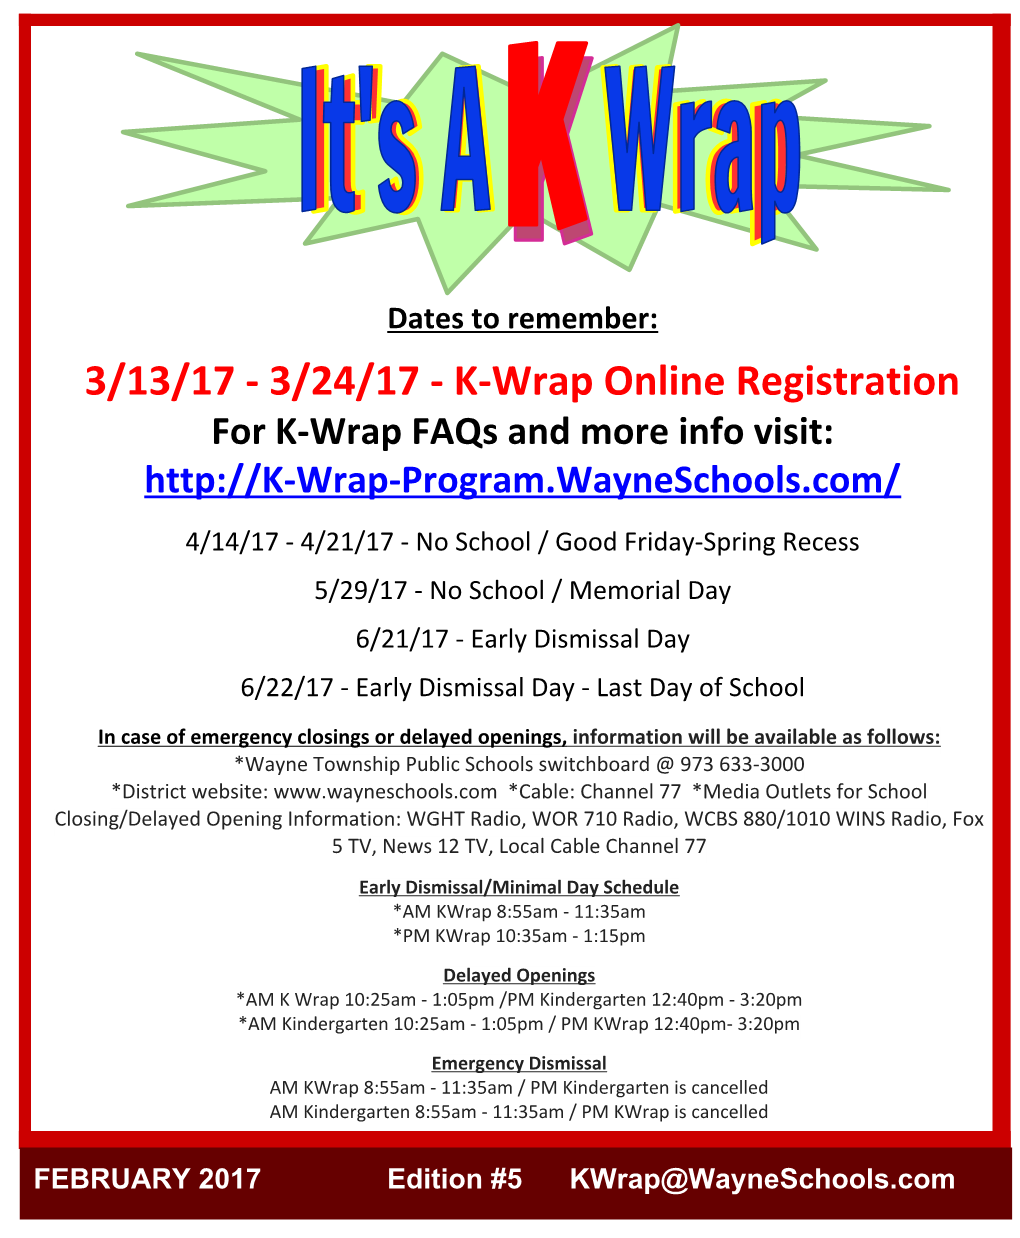 K-Wrap Online Registration for K-Wrap Faqs and More Info Visit